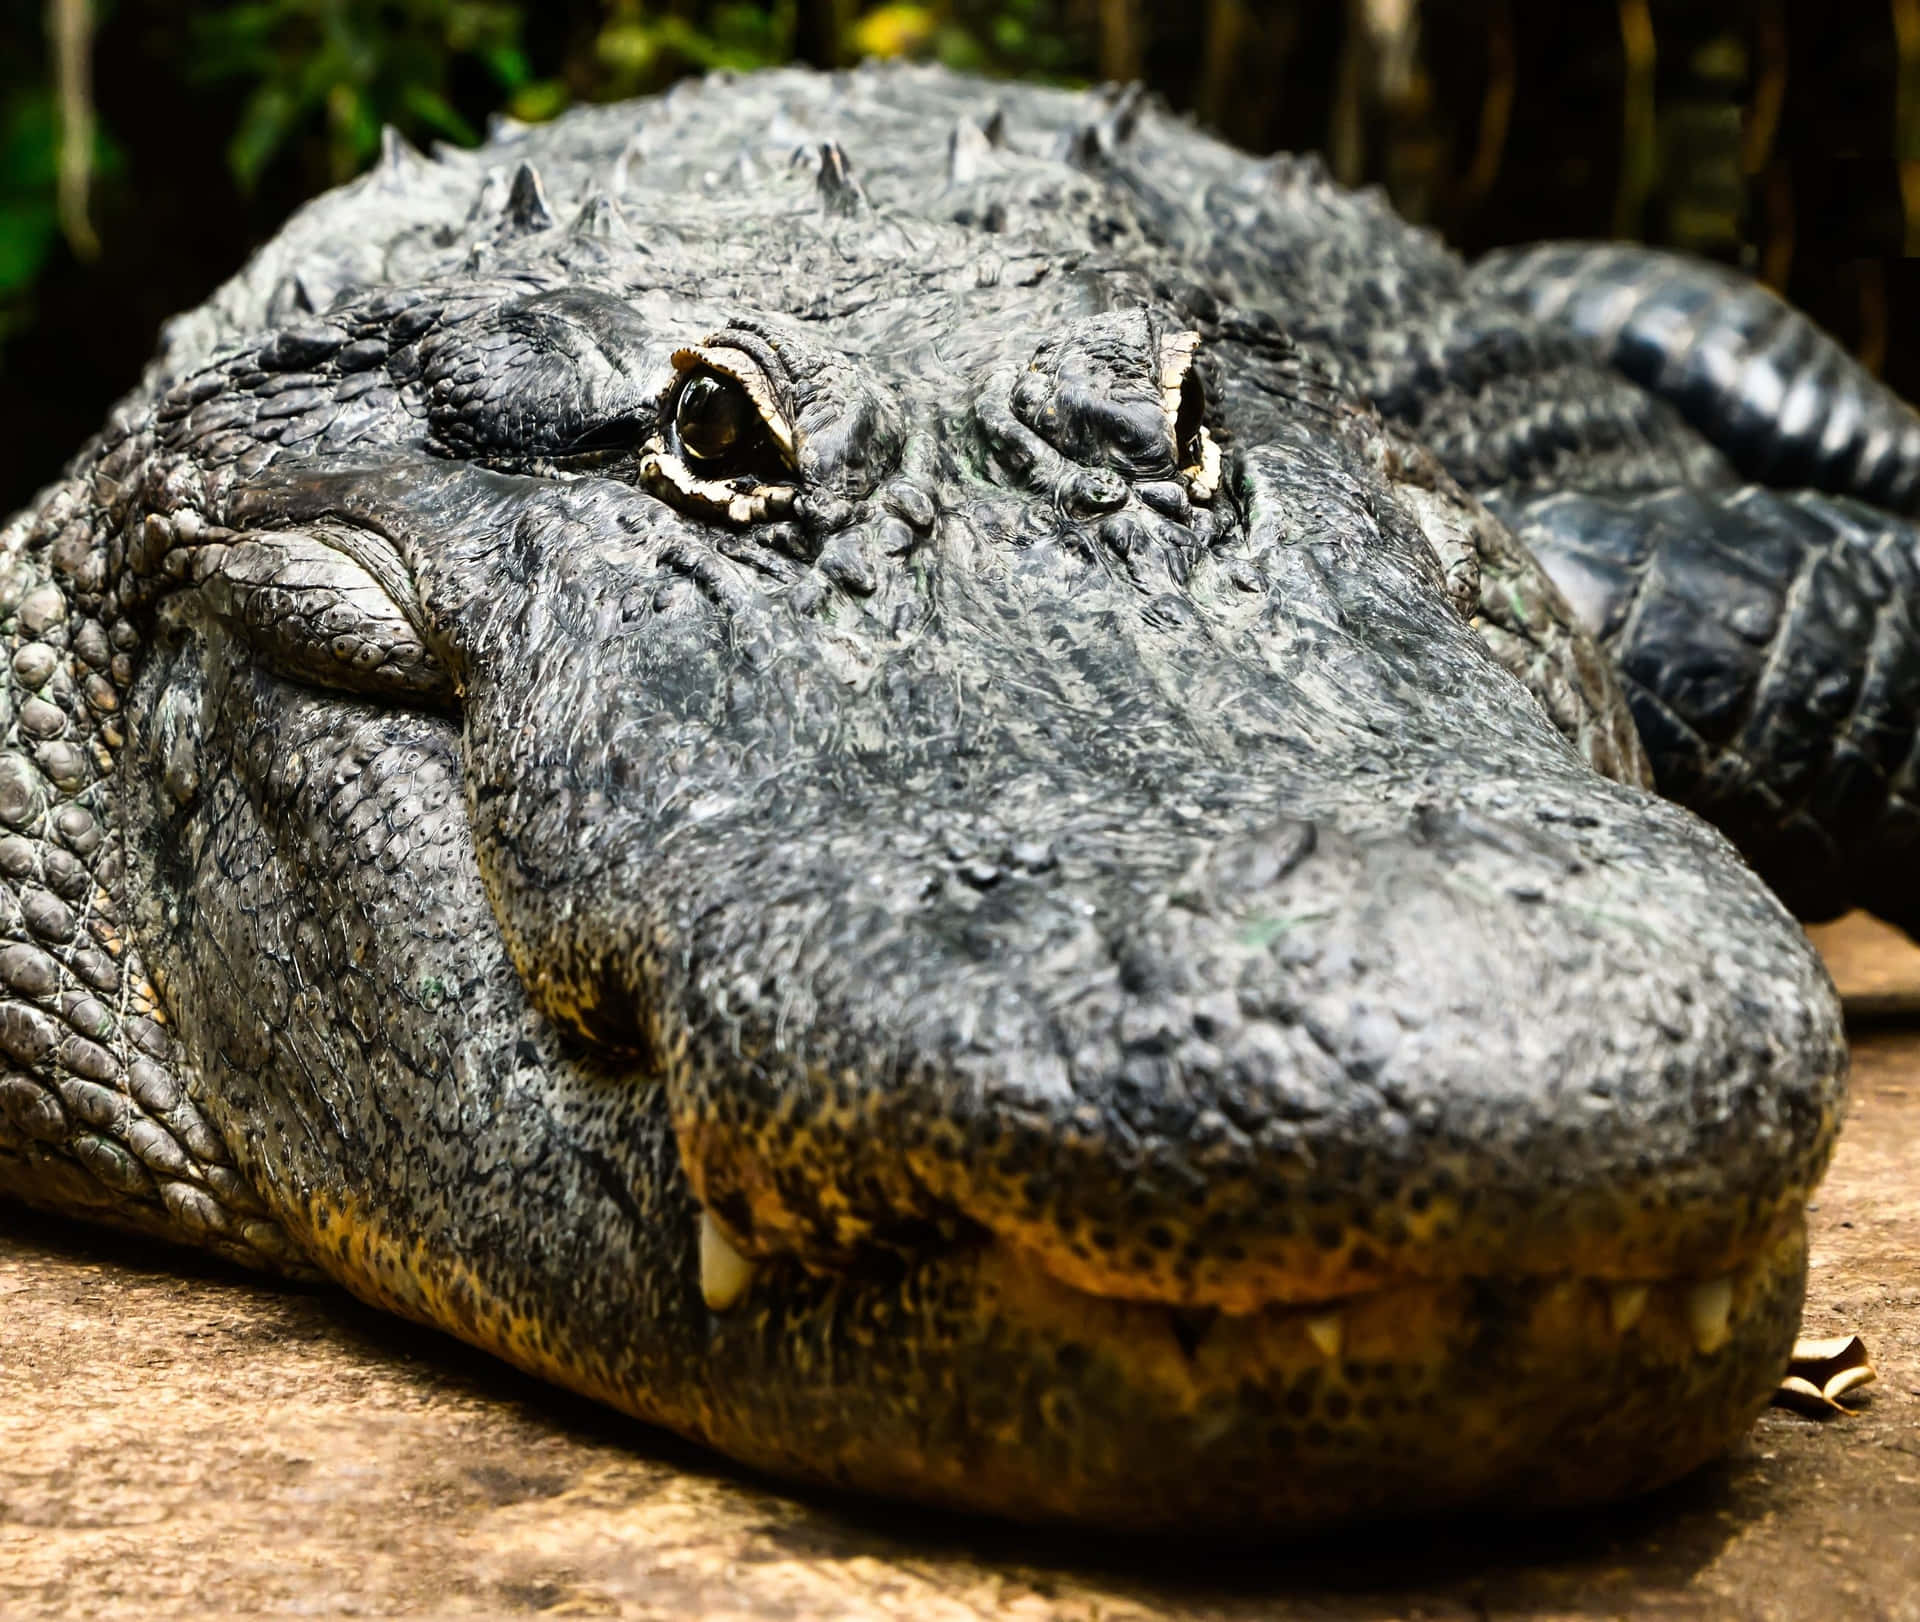 Close-up of Alligator Snout